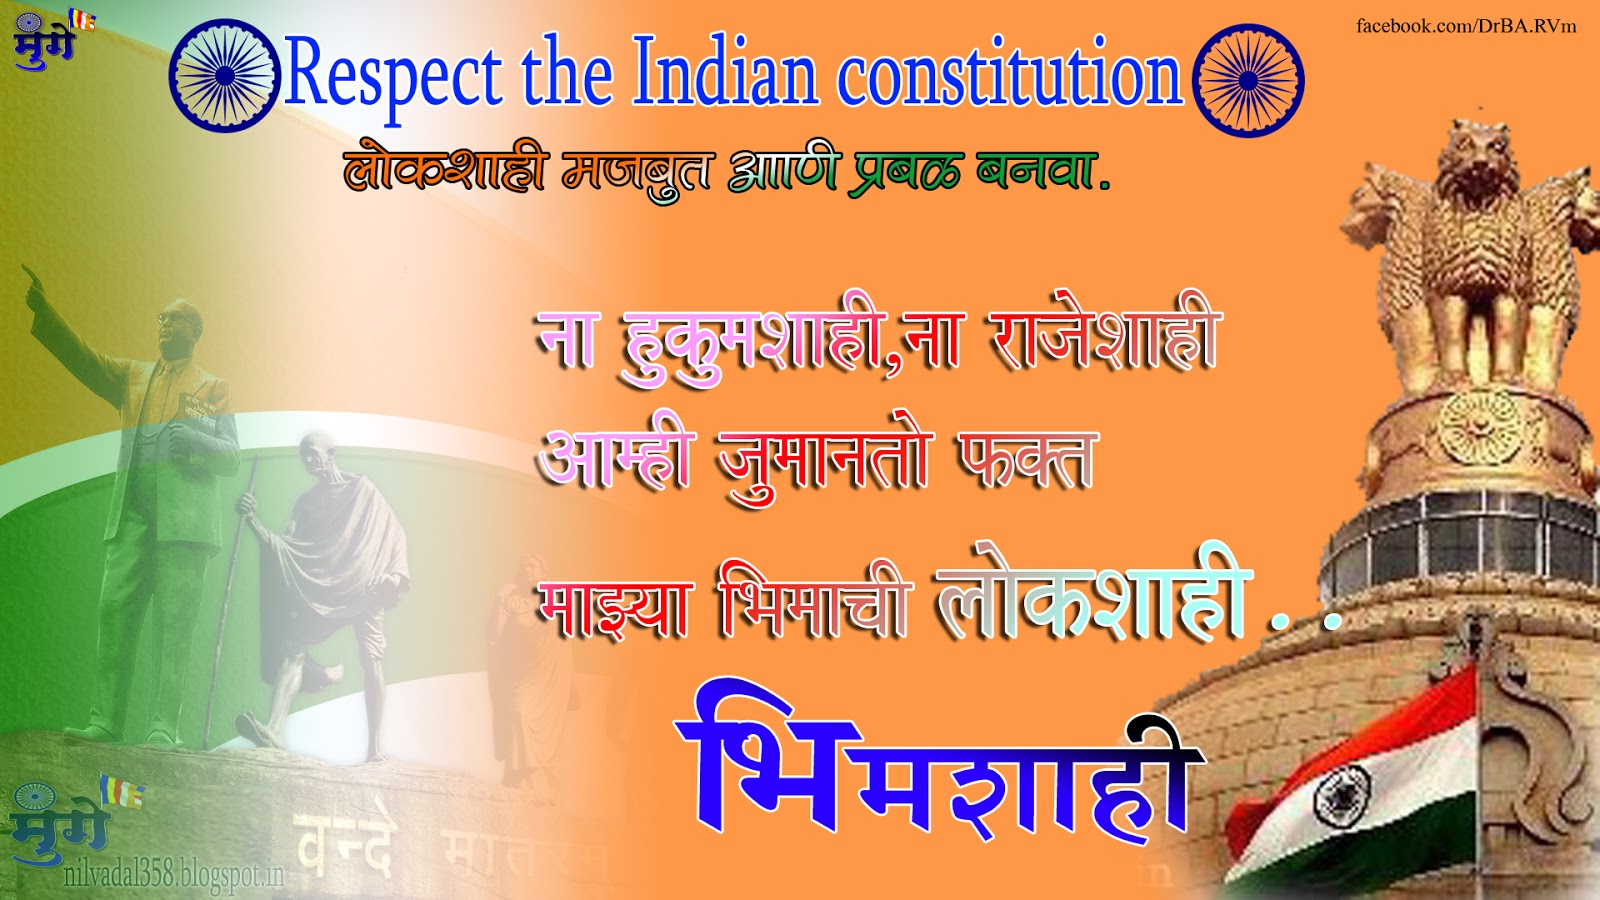 https://blogger.googleusercontent.com/img/b/R29vZ2xl/AVvXsEg-POfafzSSfxddyYc7zdEIjNr7LZ1hGN9nBd8fDzm71iQjpQJgRKcAQjHLGdJCN7zBF3U5mjCkHYwFnDO59RXTpPJybp6fC96o4SzWo88NKwpxlMgic0WKj1GF9G-0O0k3DJ7UCiKcT4Vw/s1600/democracy-lokshahi-bhimshahi-parlment-respect+the+indian+constitution-insult+constitution-happy+republic+day-wallpaper+hs-b+r+ambedkar-marathi+kavita+shayri,sms.jpg